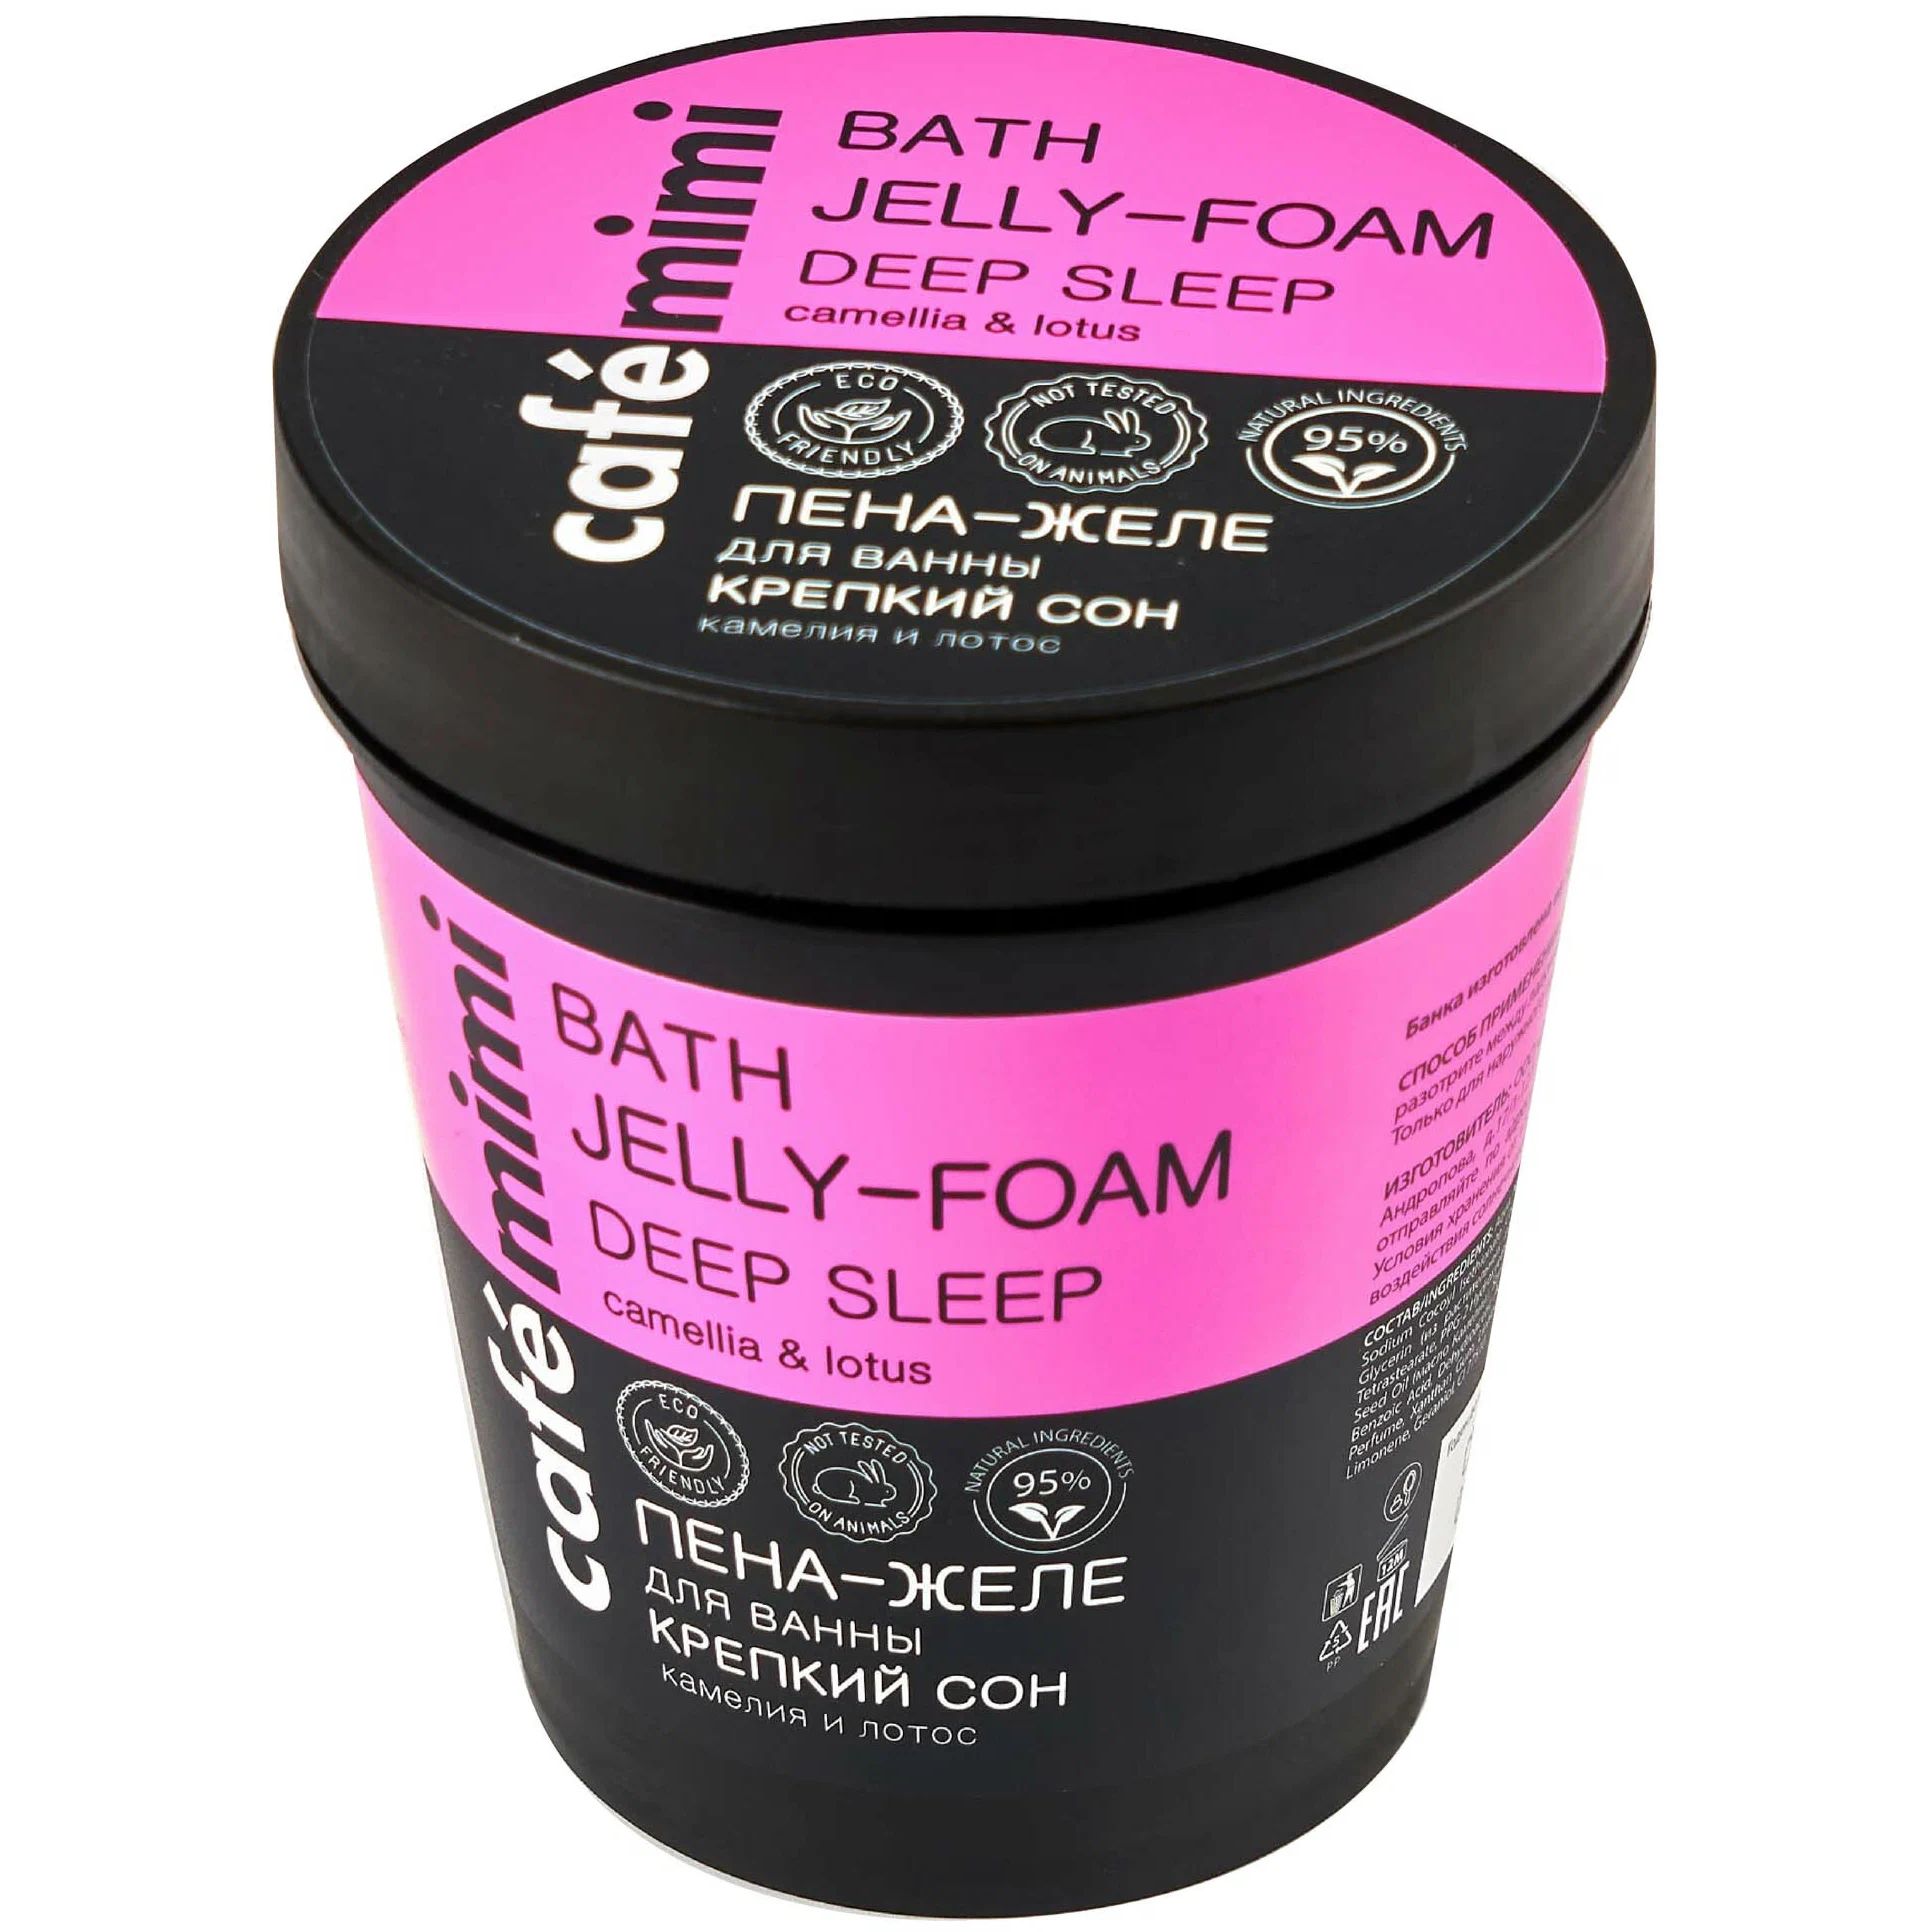 Пена-желе для ванны Cafe Mimi Bath Jelly-Foam Deep Sleep Крепкий сон релакс-эффект, 220 мл